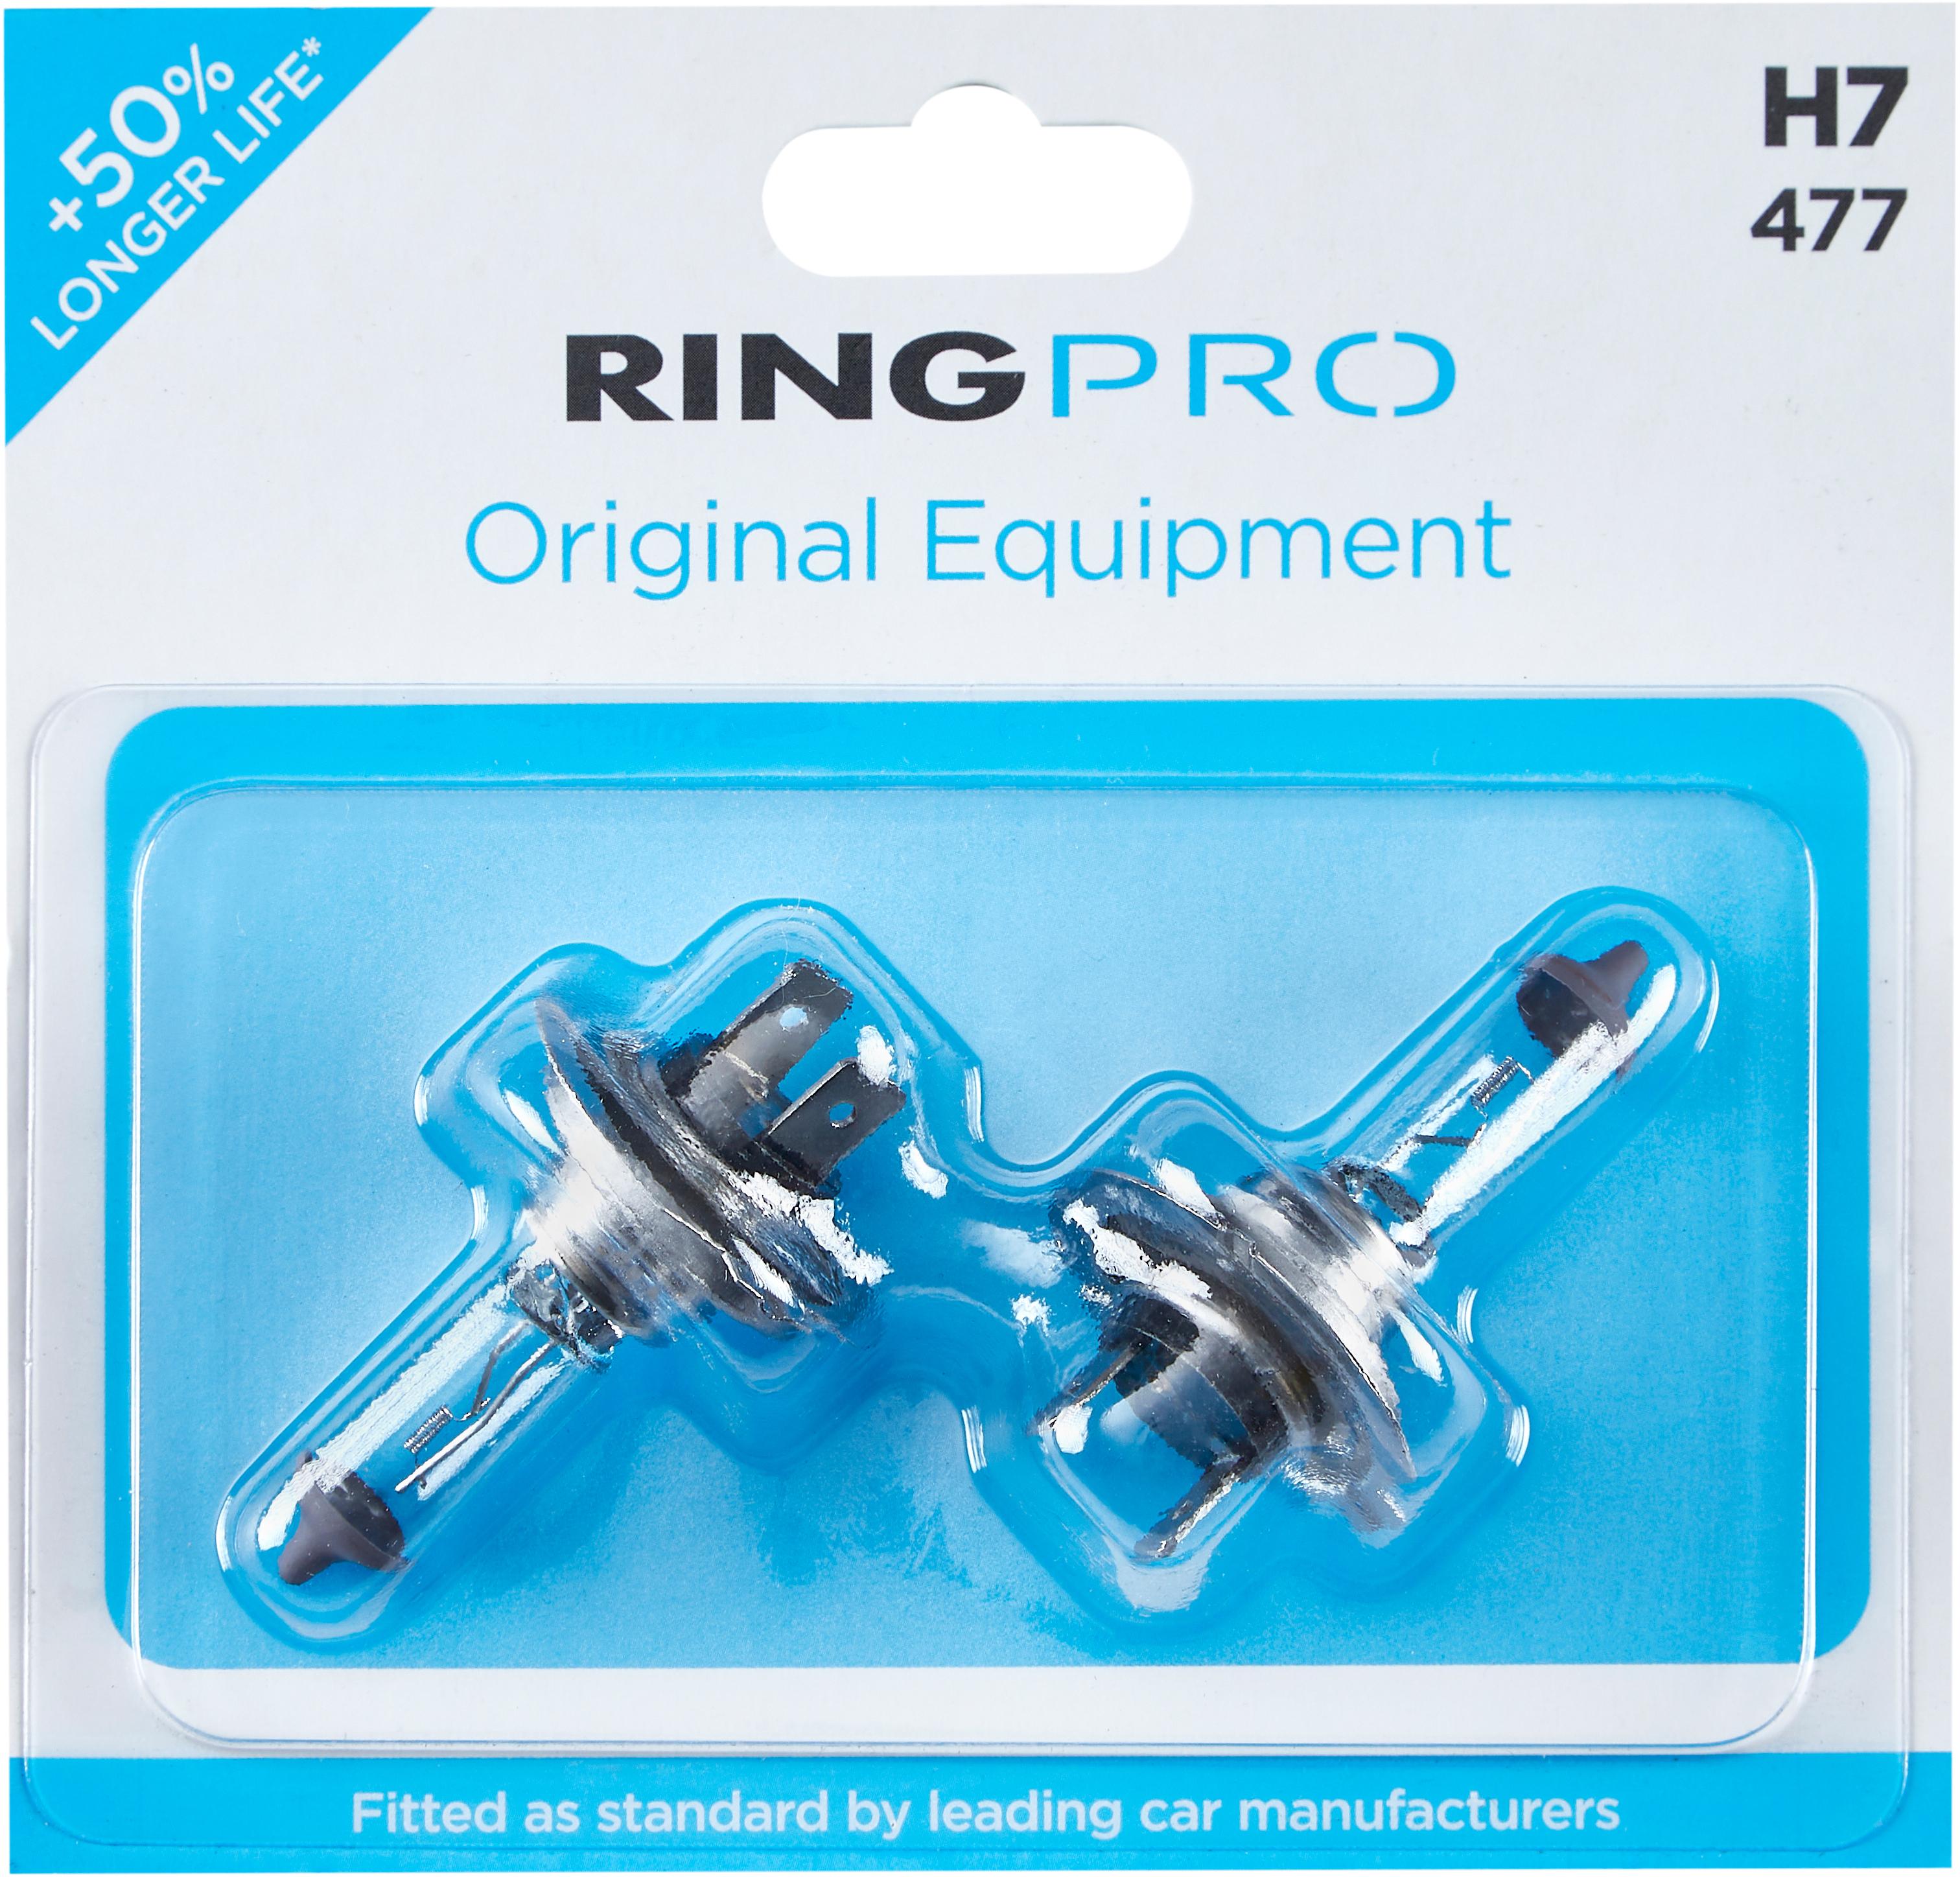 Ring Pro H7 477 Car Headlight Bulb Twin Pack